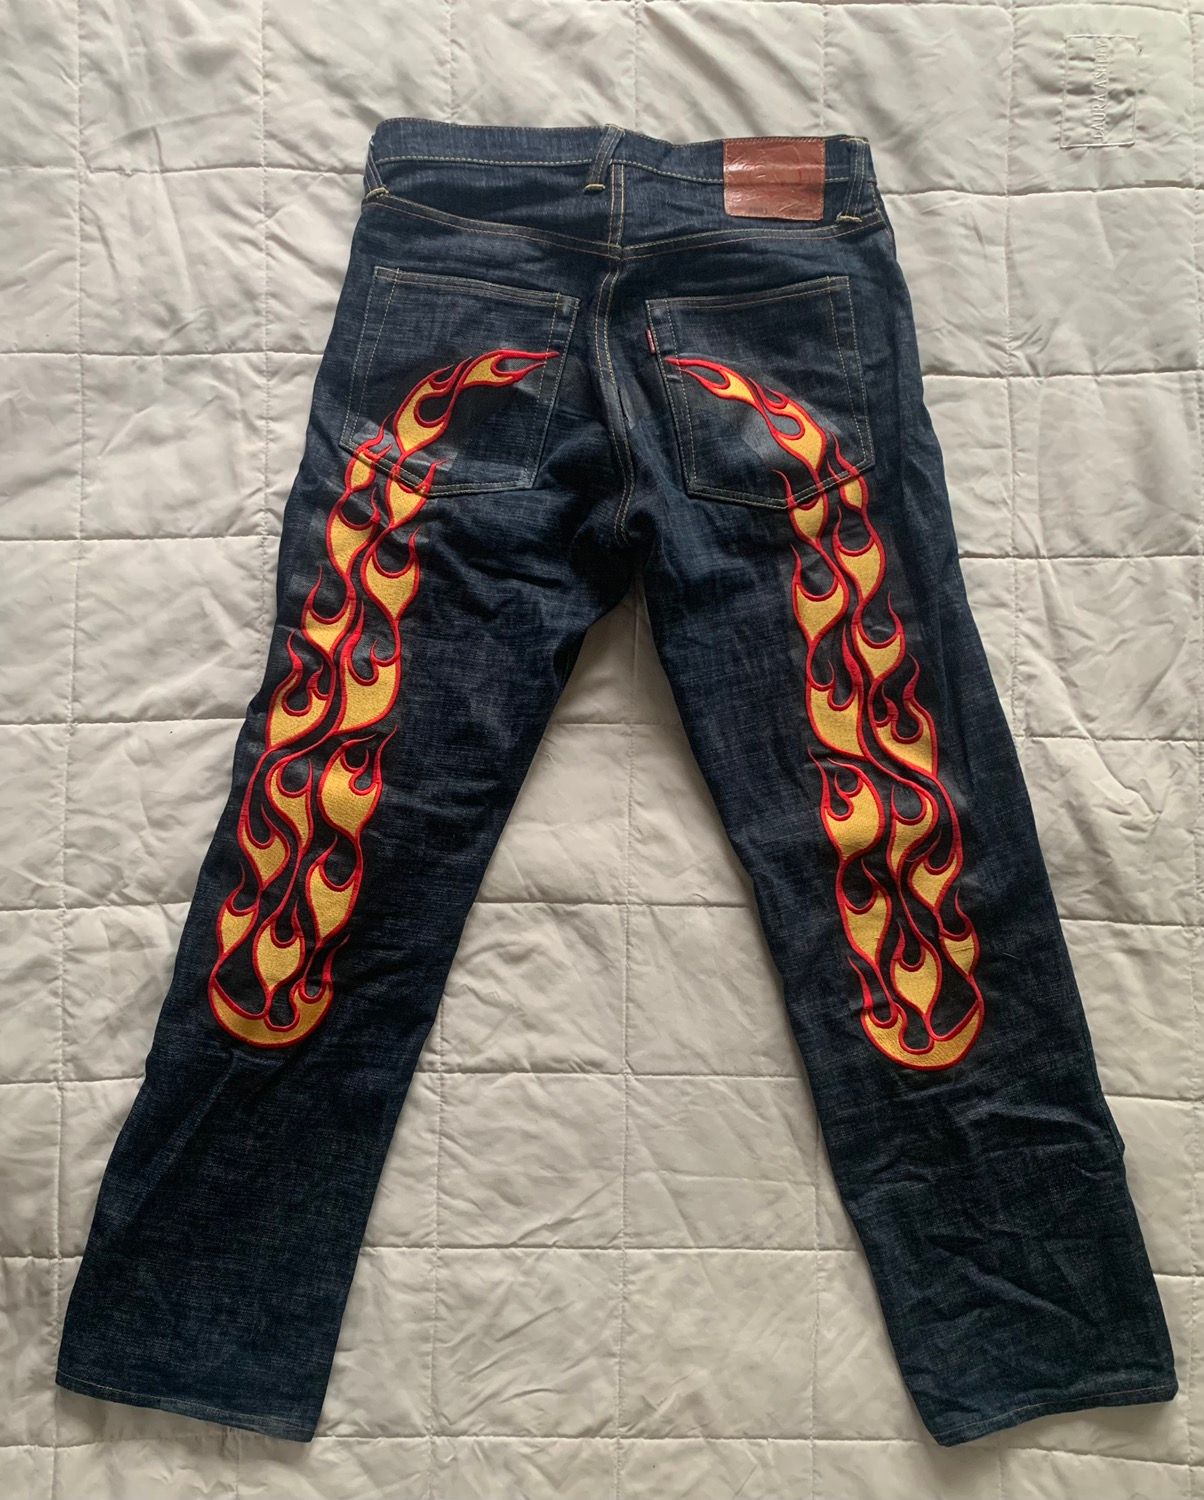 Evisu Evisu Jeans (Red & Yellow flame) | Grailed